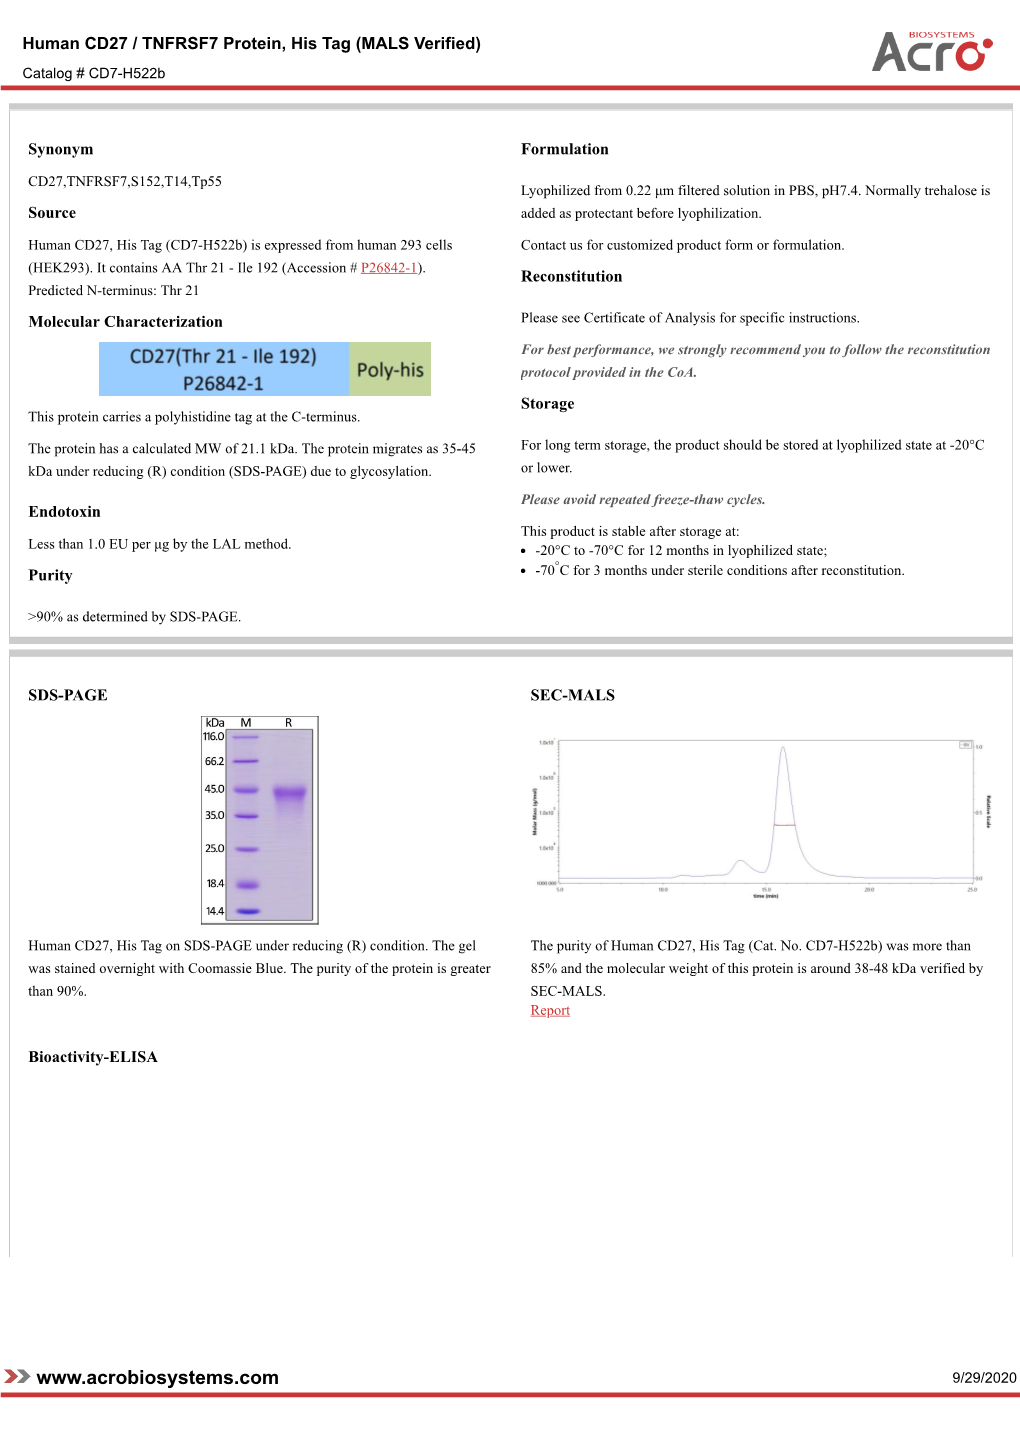 Human CD27 / TNFRSF7 Protein, His Tag (MALS Verified) Catalog # CD7-H522b